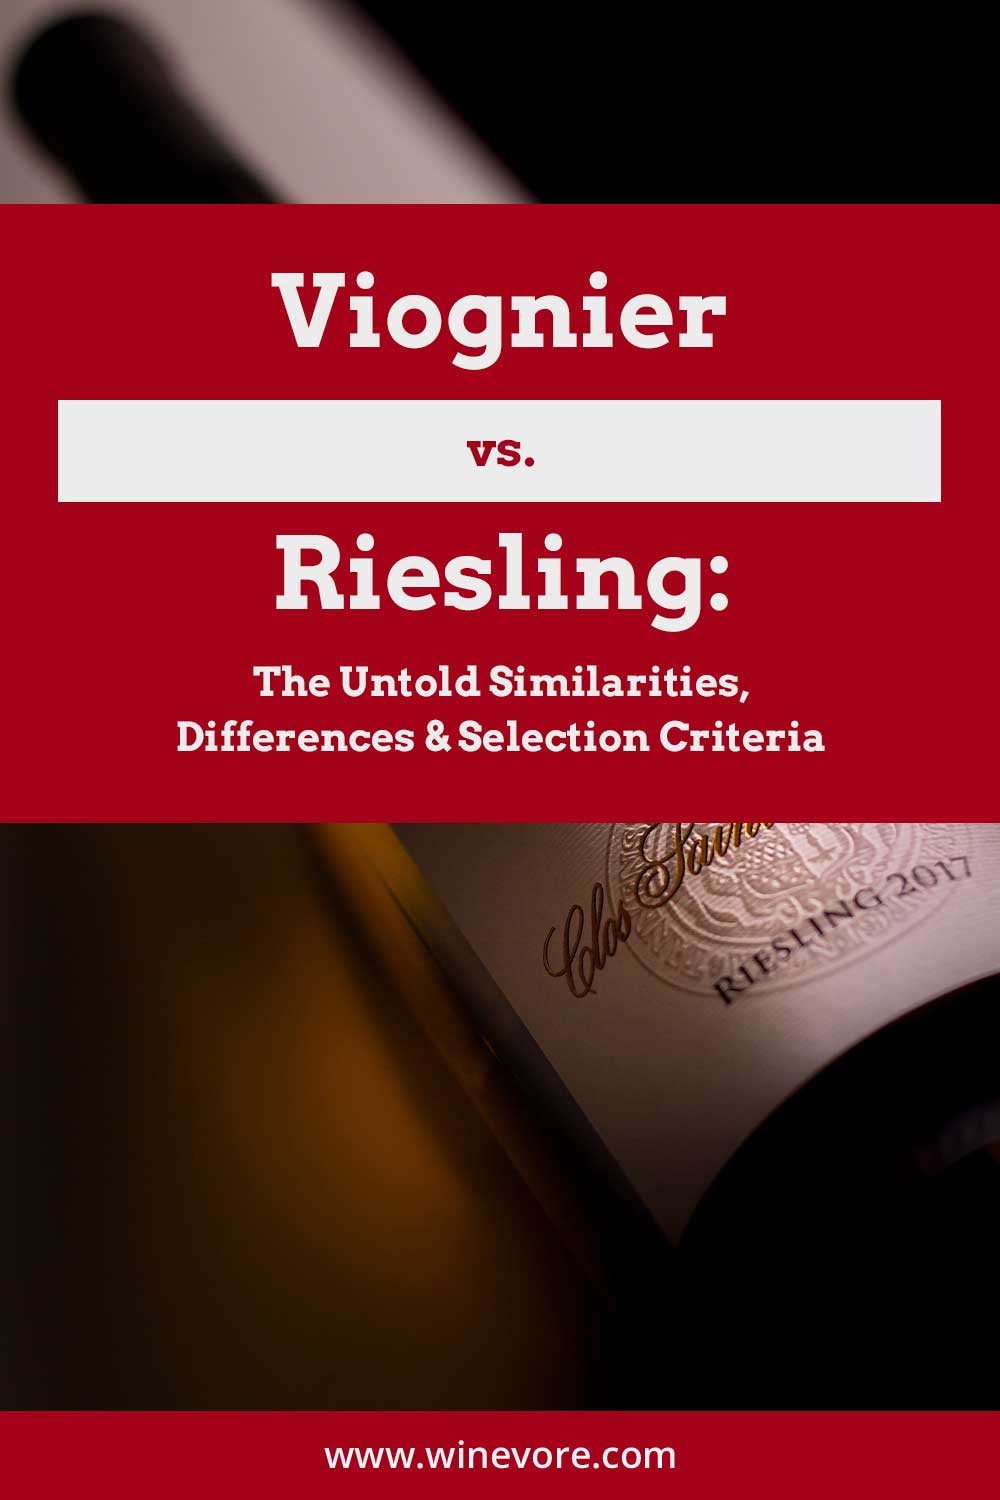 A wine bottle - Viognier vs. Riesling